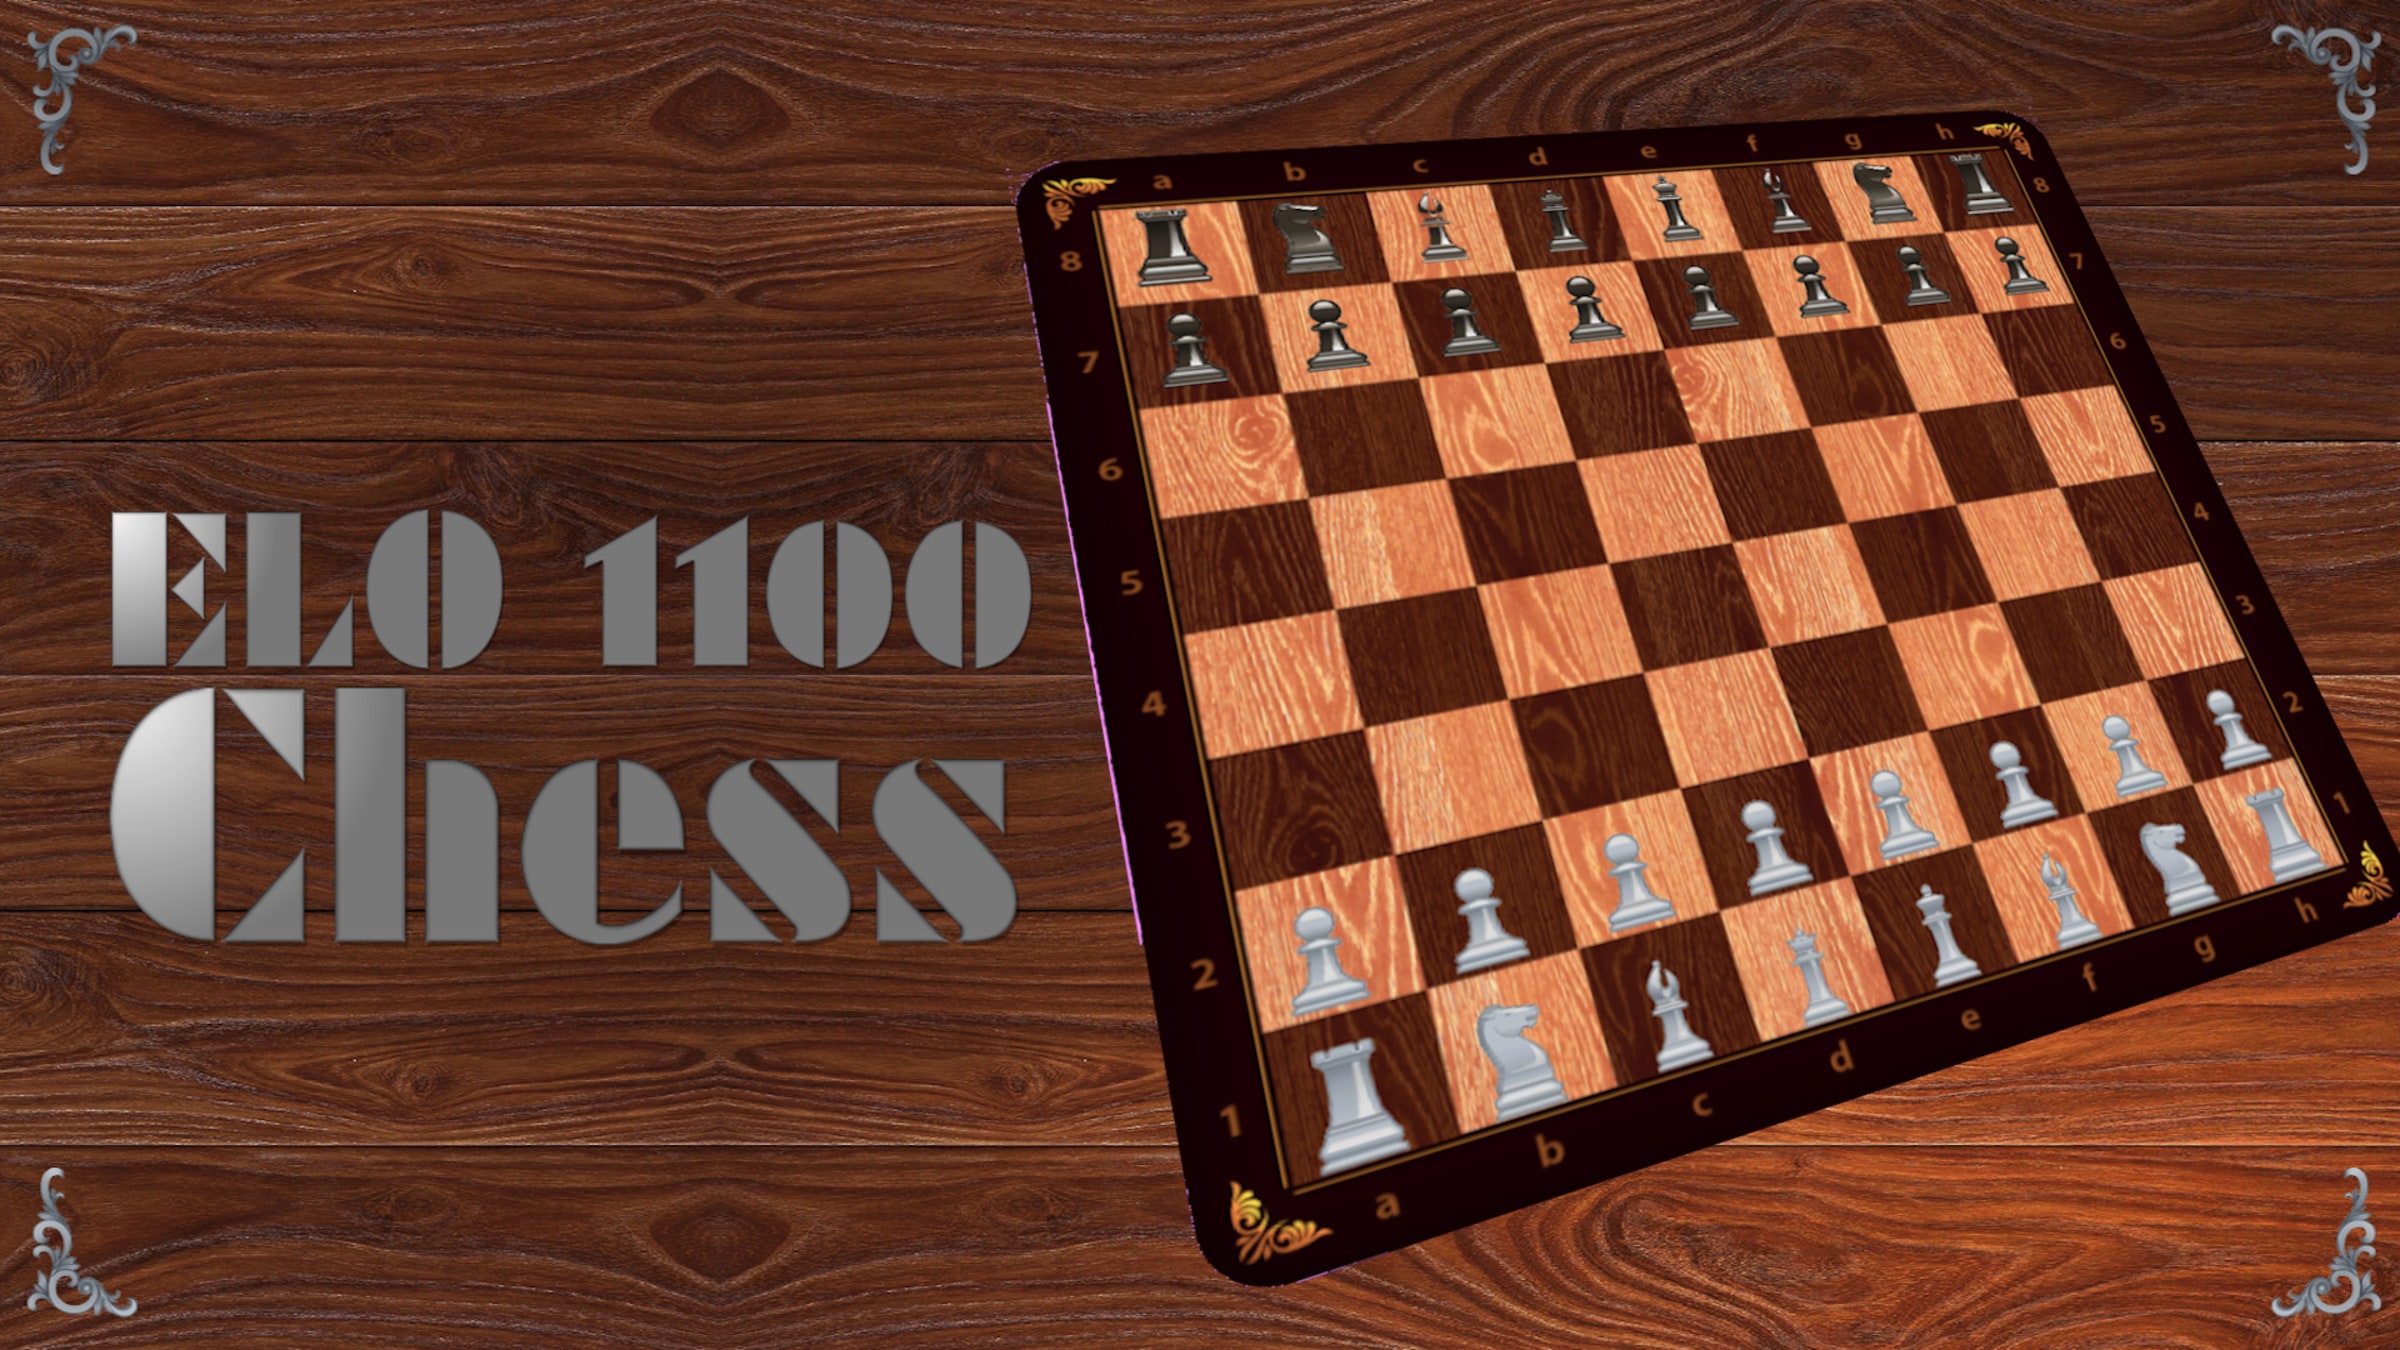 0 Elo Chess 